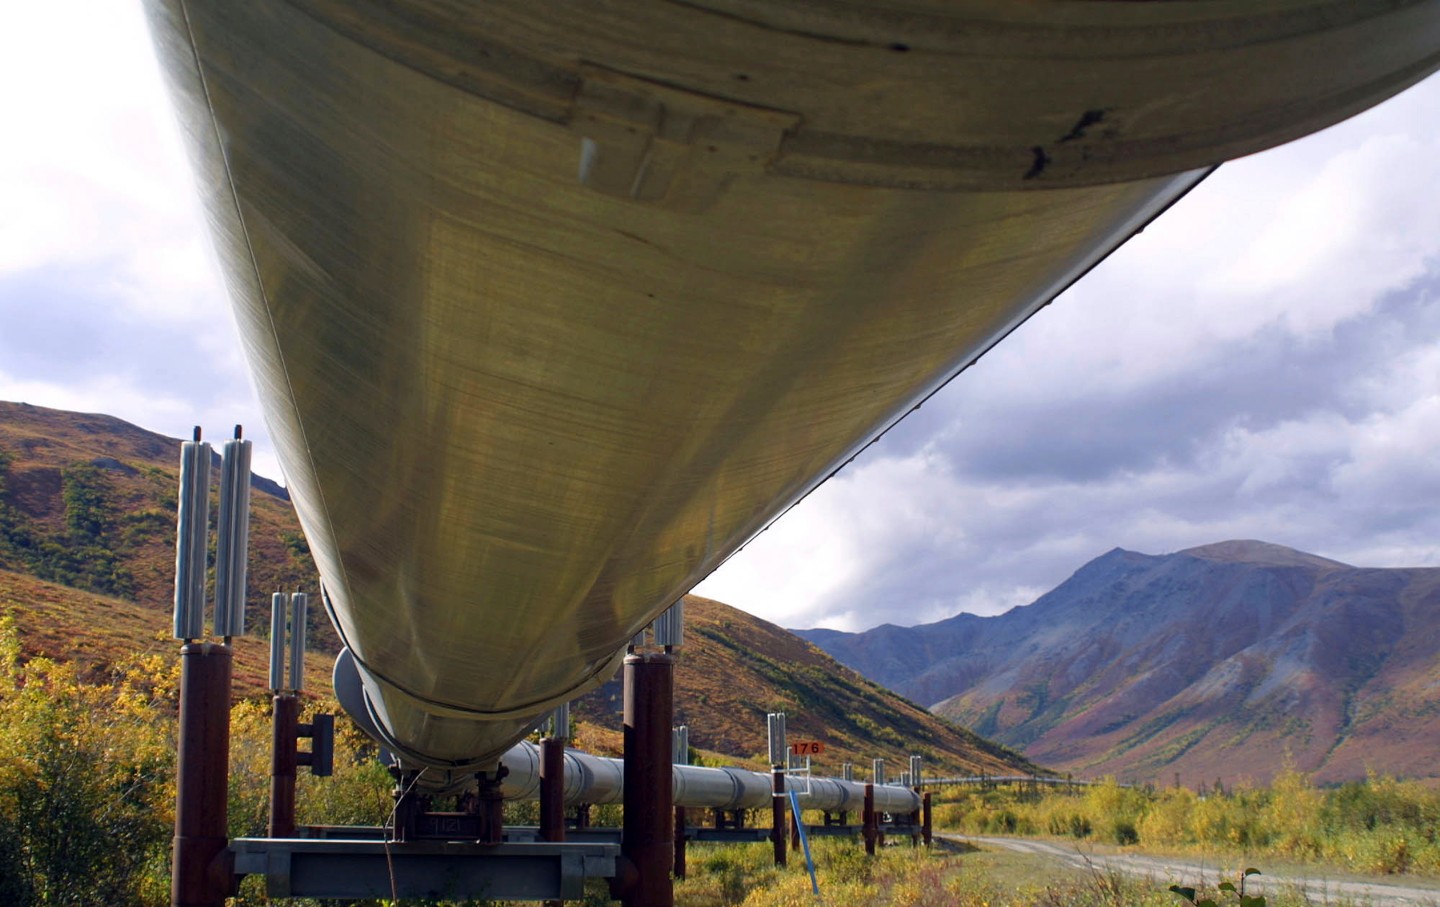 A portion of the Trans-Alaska Pipeline near Fairbanks, Alaska